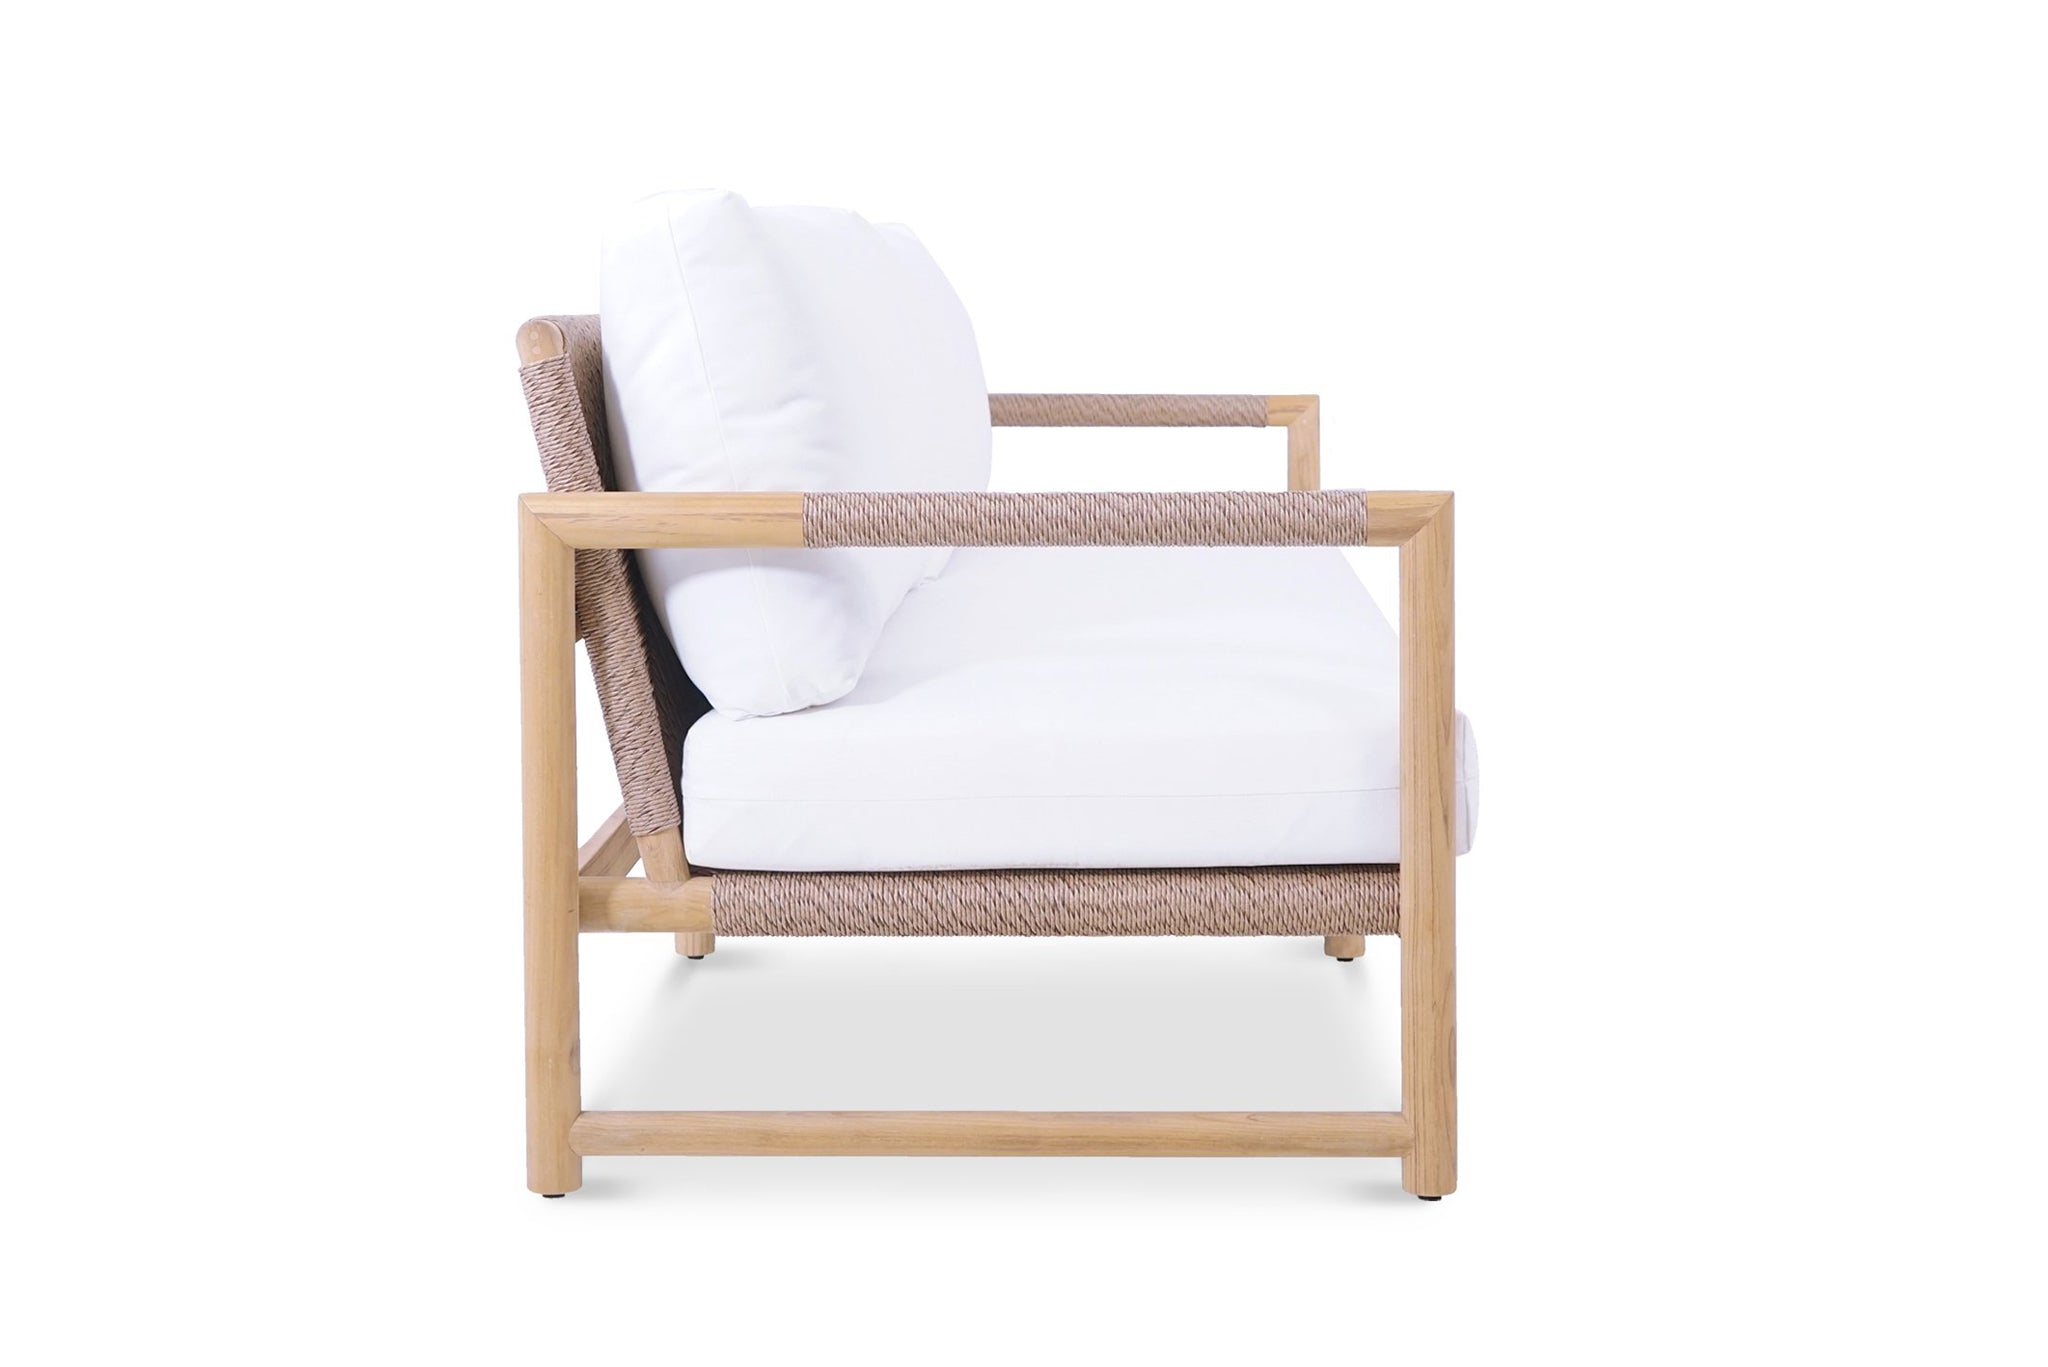 Jervis Bay Teak Outdoor Sofa – 3 Seater